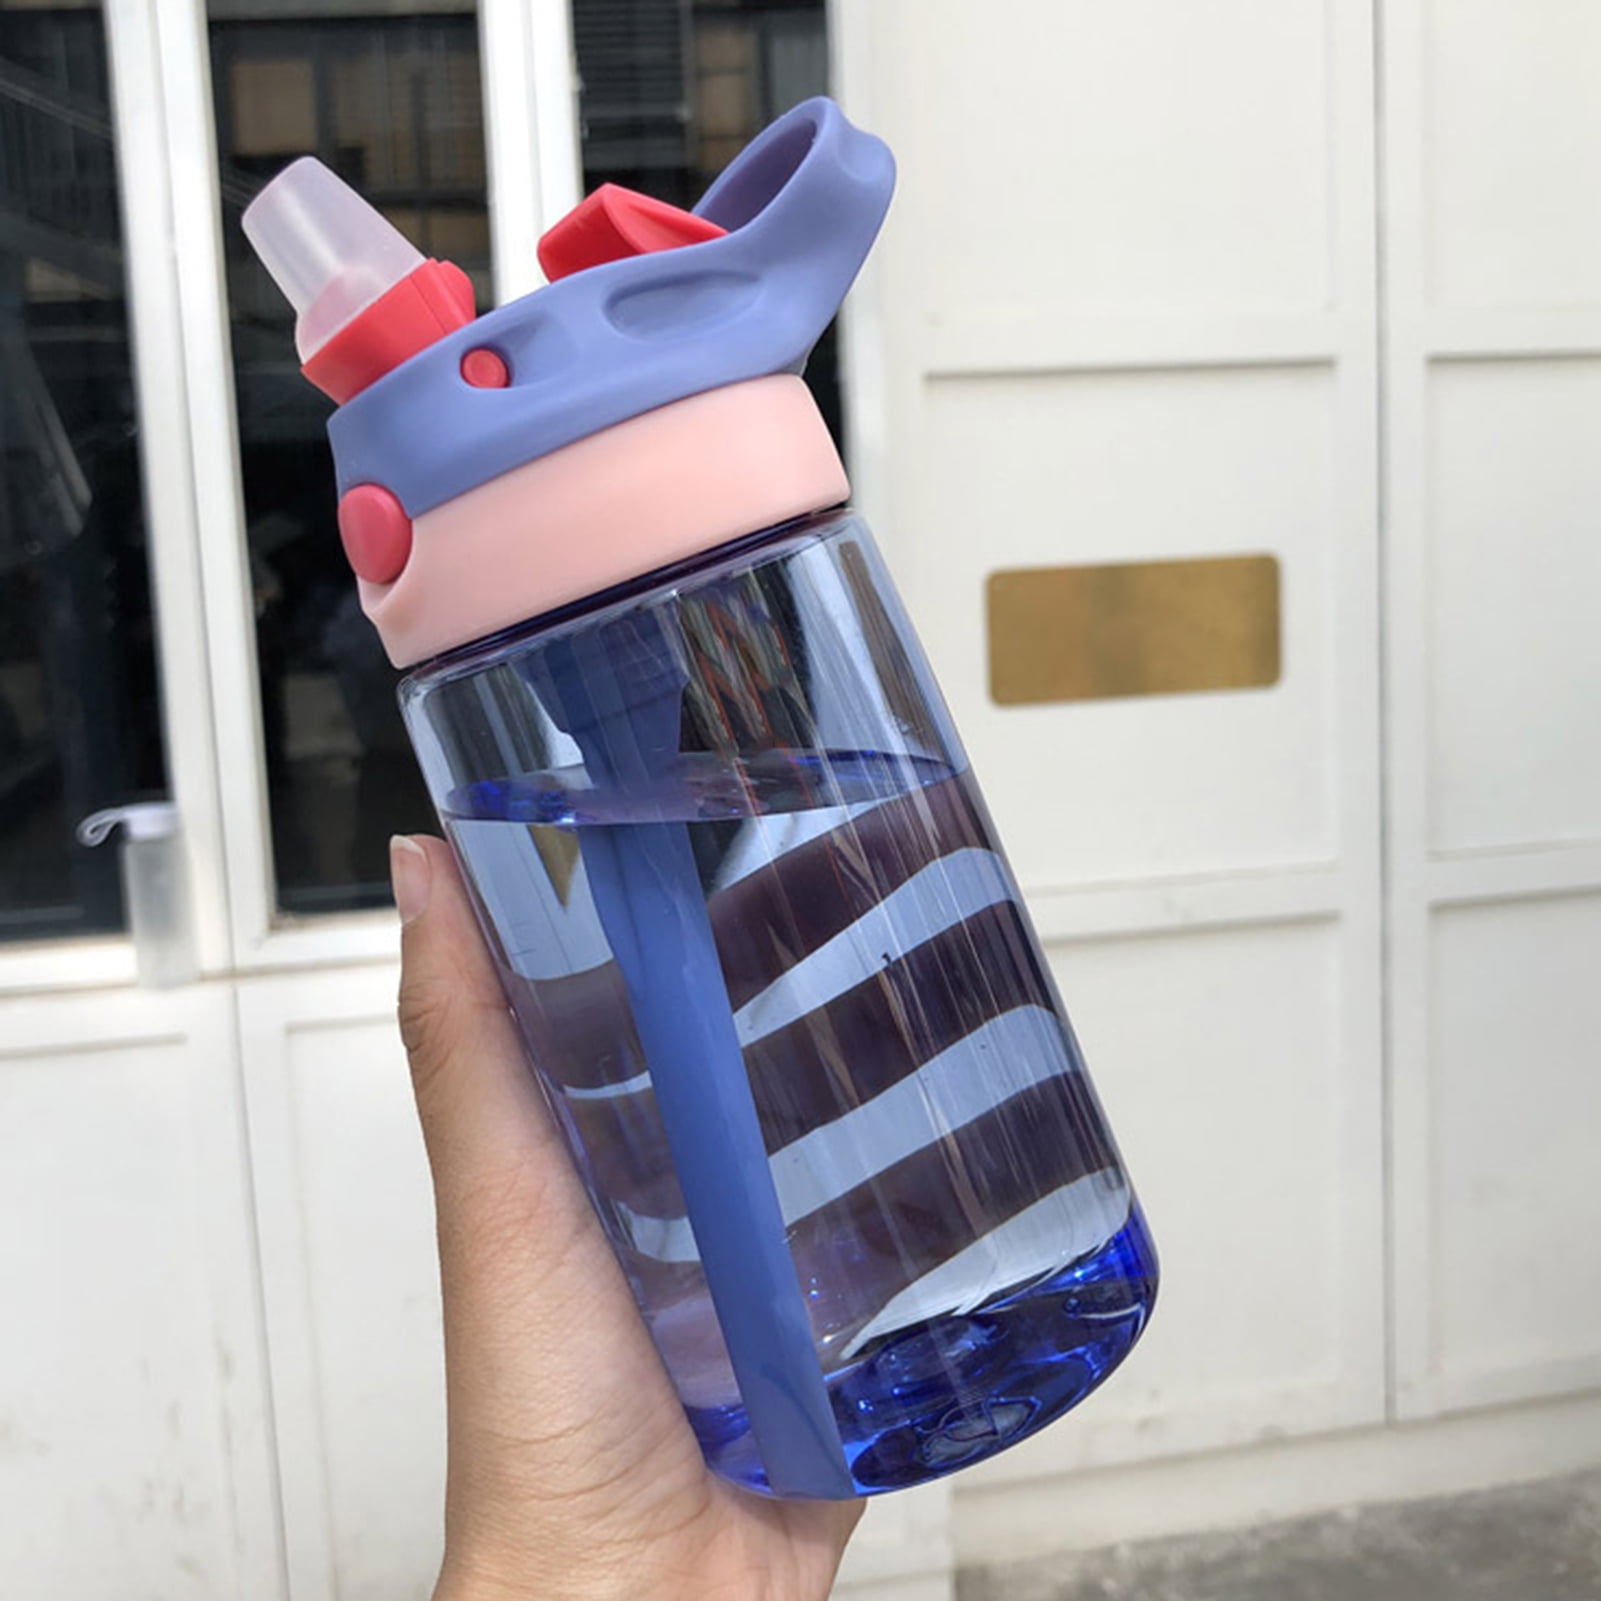 Rtteri 20 Pcs Water Bottle Kids 17 oz Plastic Reusable Leakproof Flip Top  with Handle Strap, Sports …See more Rtteri 20 Pcs Water Bottle Kids 17 oz